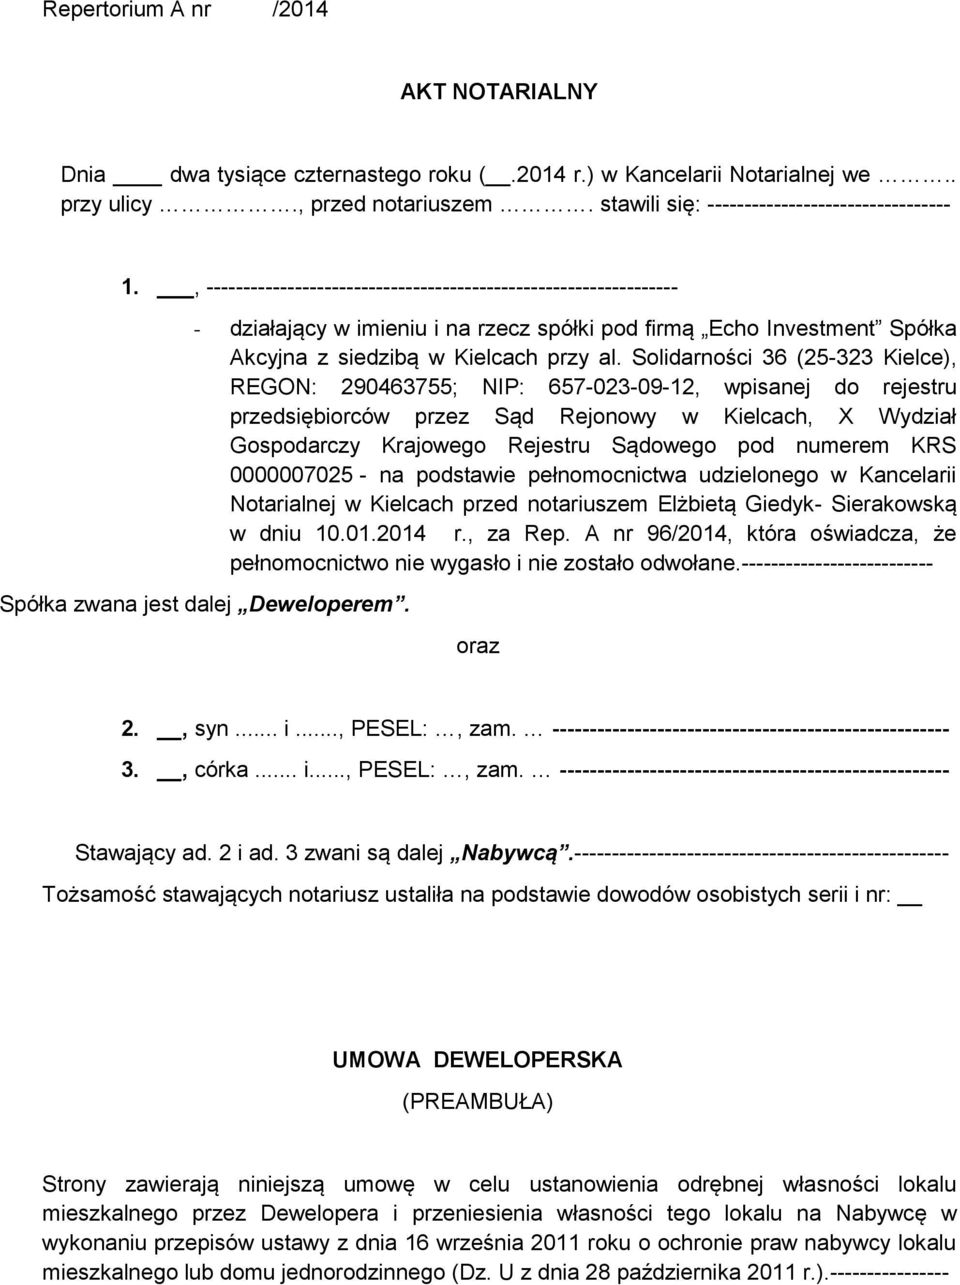 AKT NOTARIALNY UMOWA DEWELOPERSKA (PREAMBUŁA) - PDF Free Download